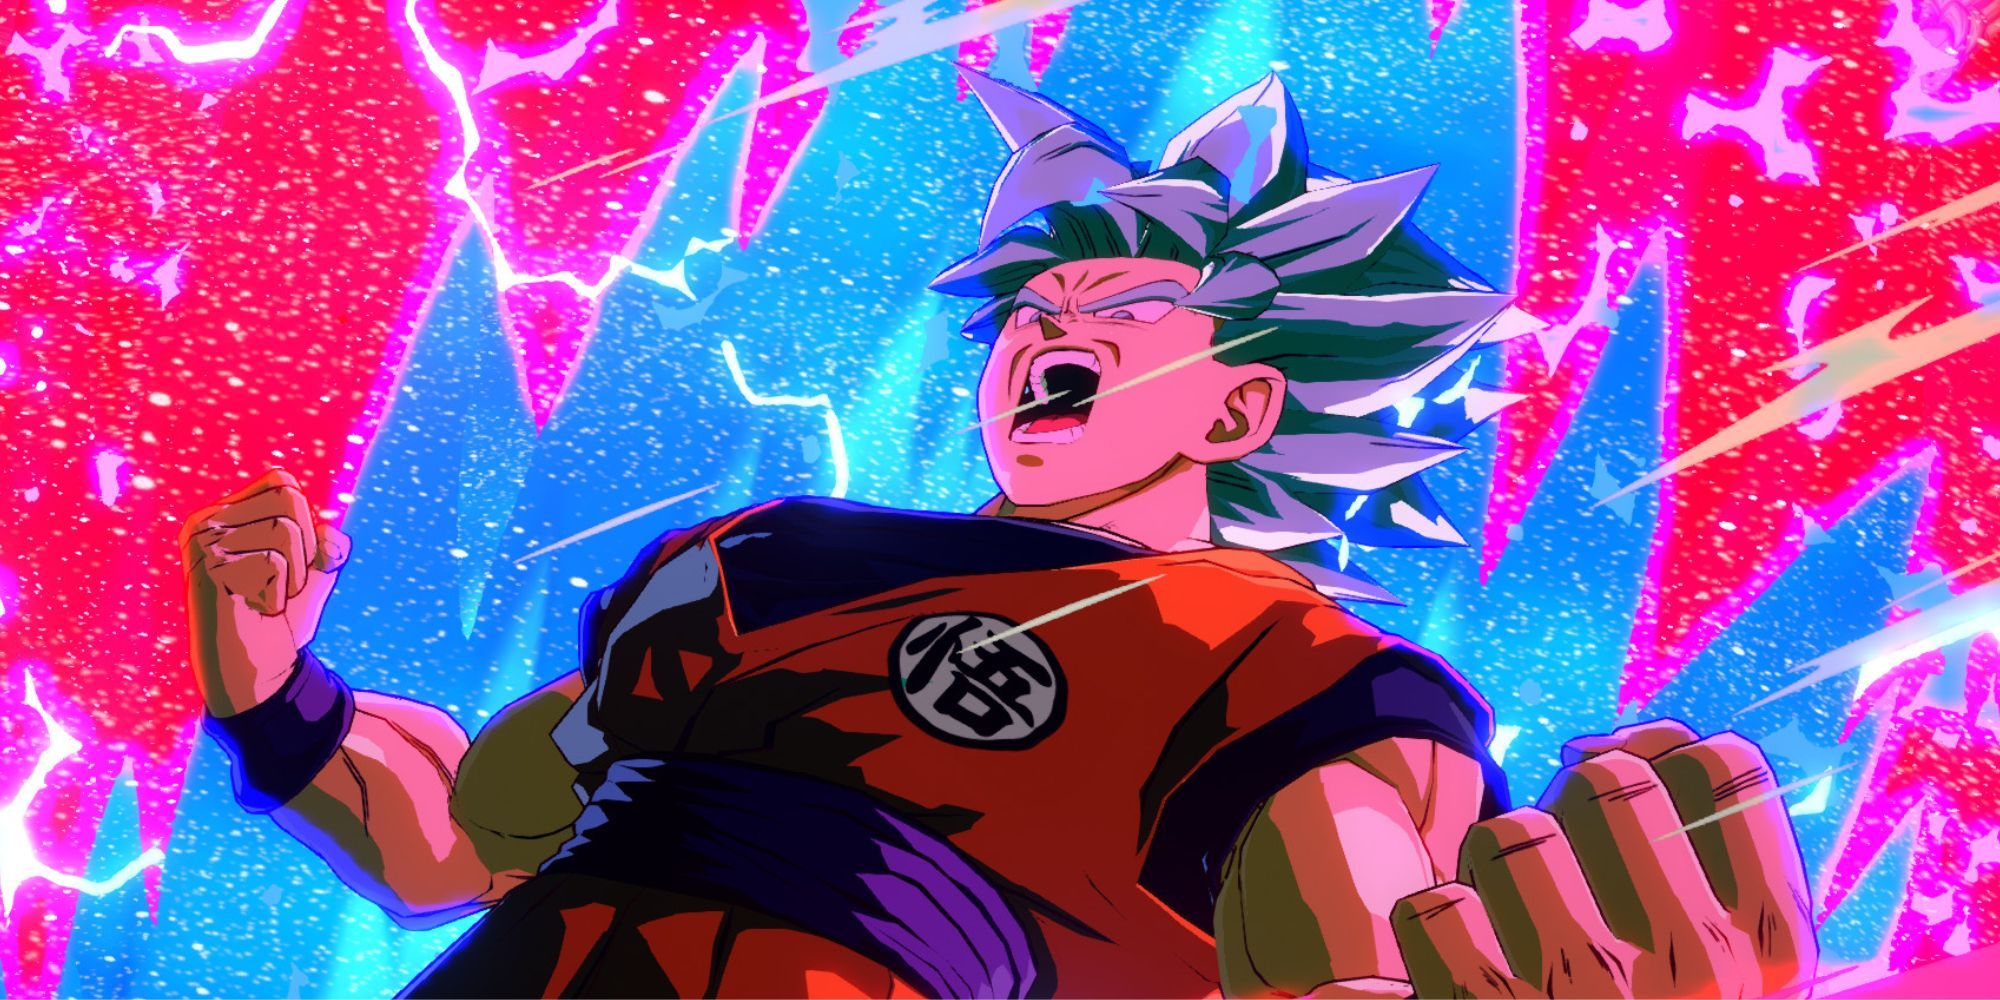 Super Saiyan God Goku using Kaioken.